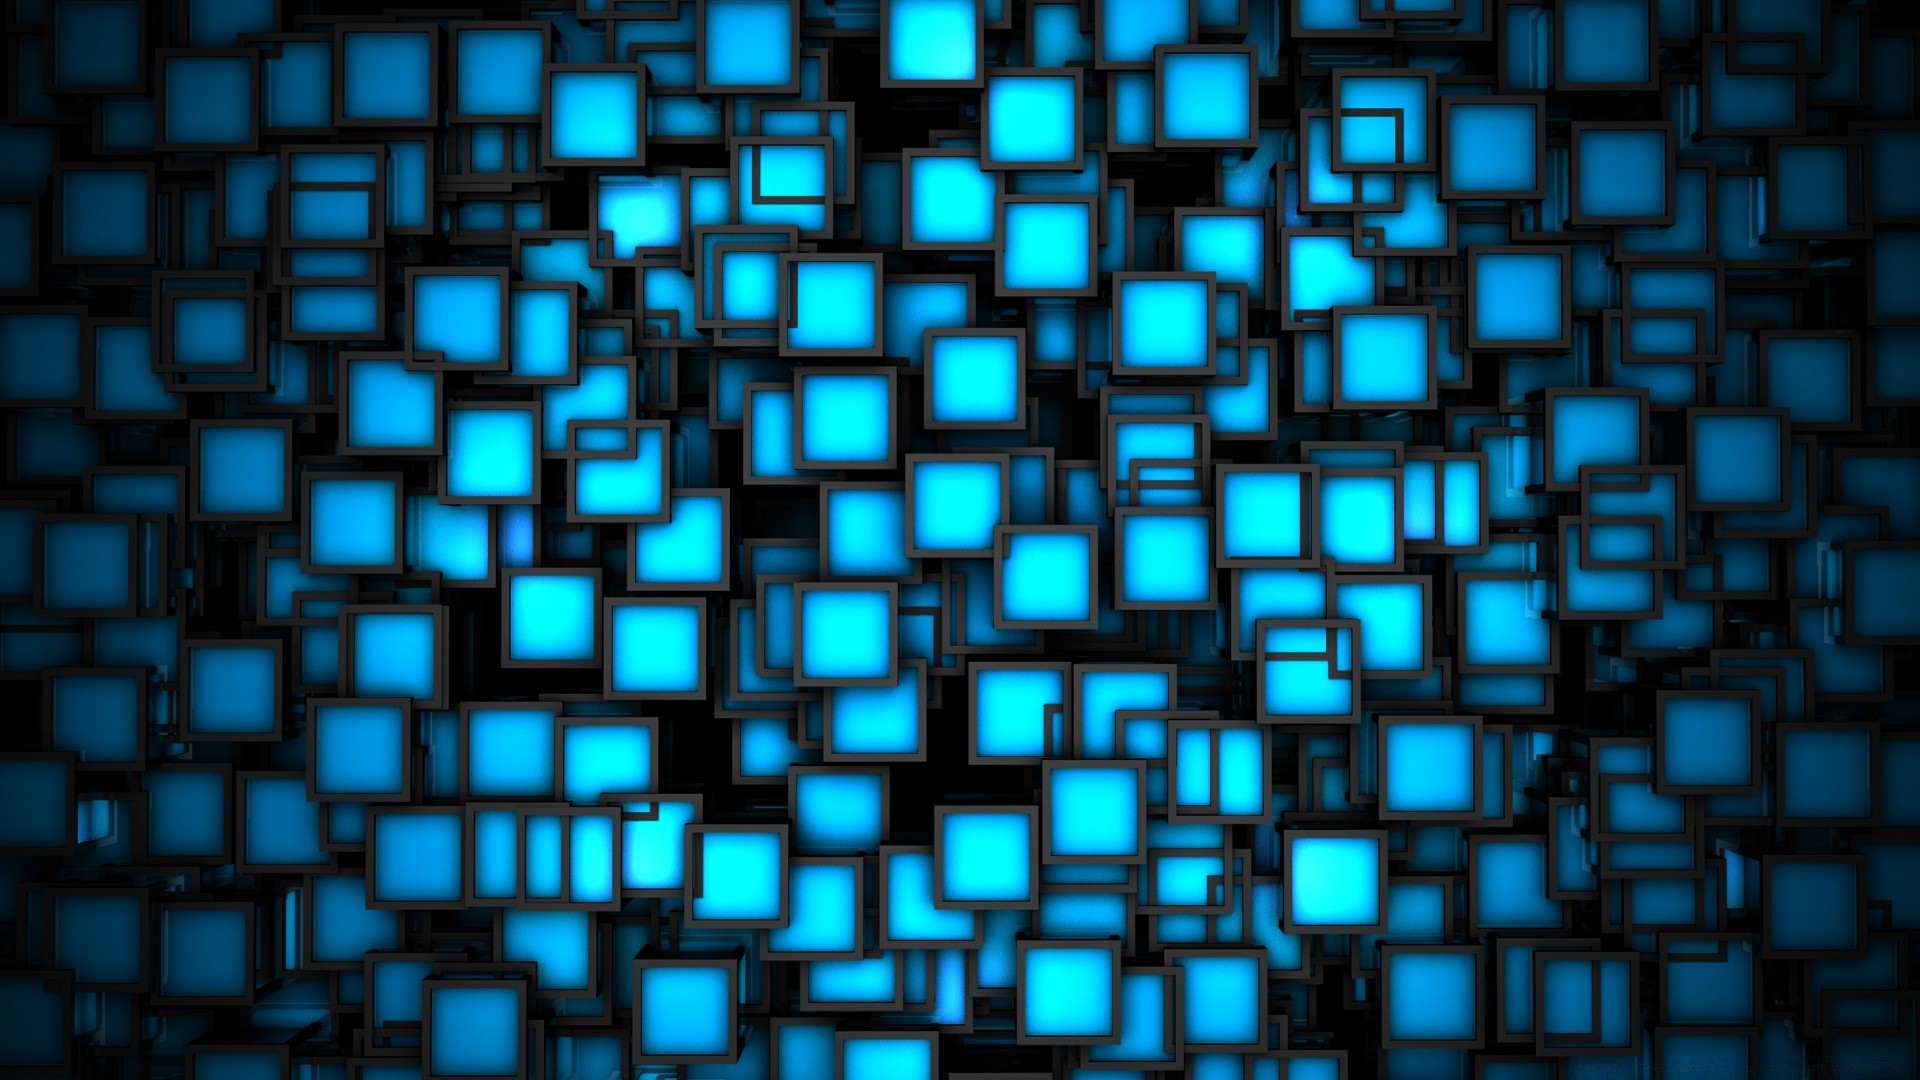 creative design internet image square wallpaper background computer abstract desktop pattern modern texture mosaic shape futuristic geometric bright technology illustration world wide web